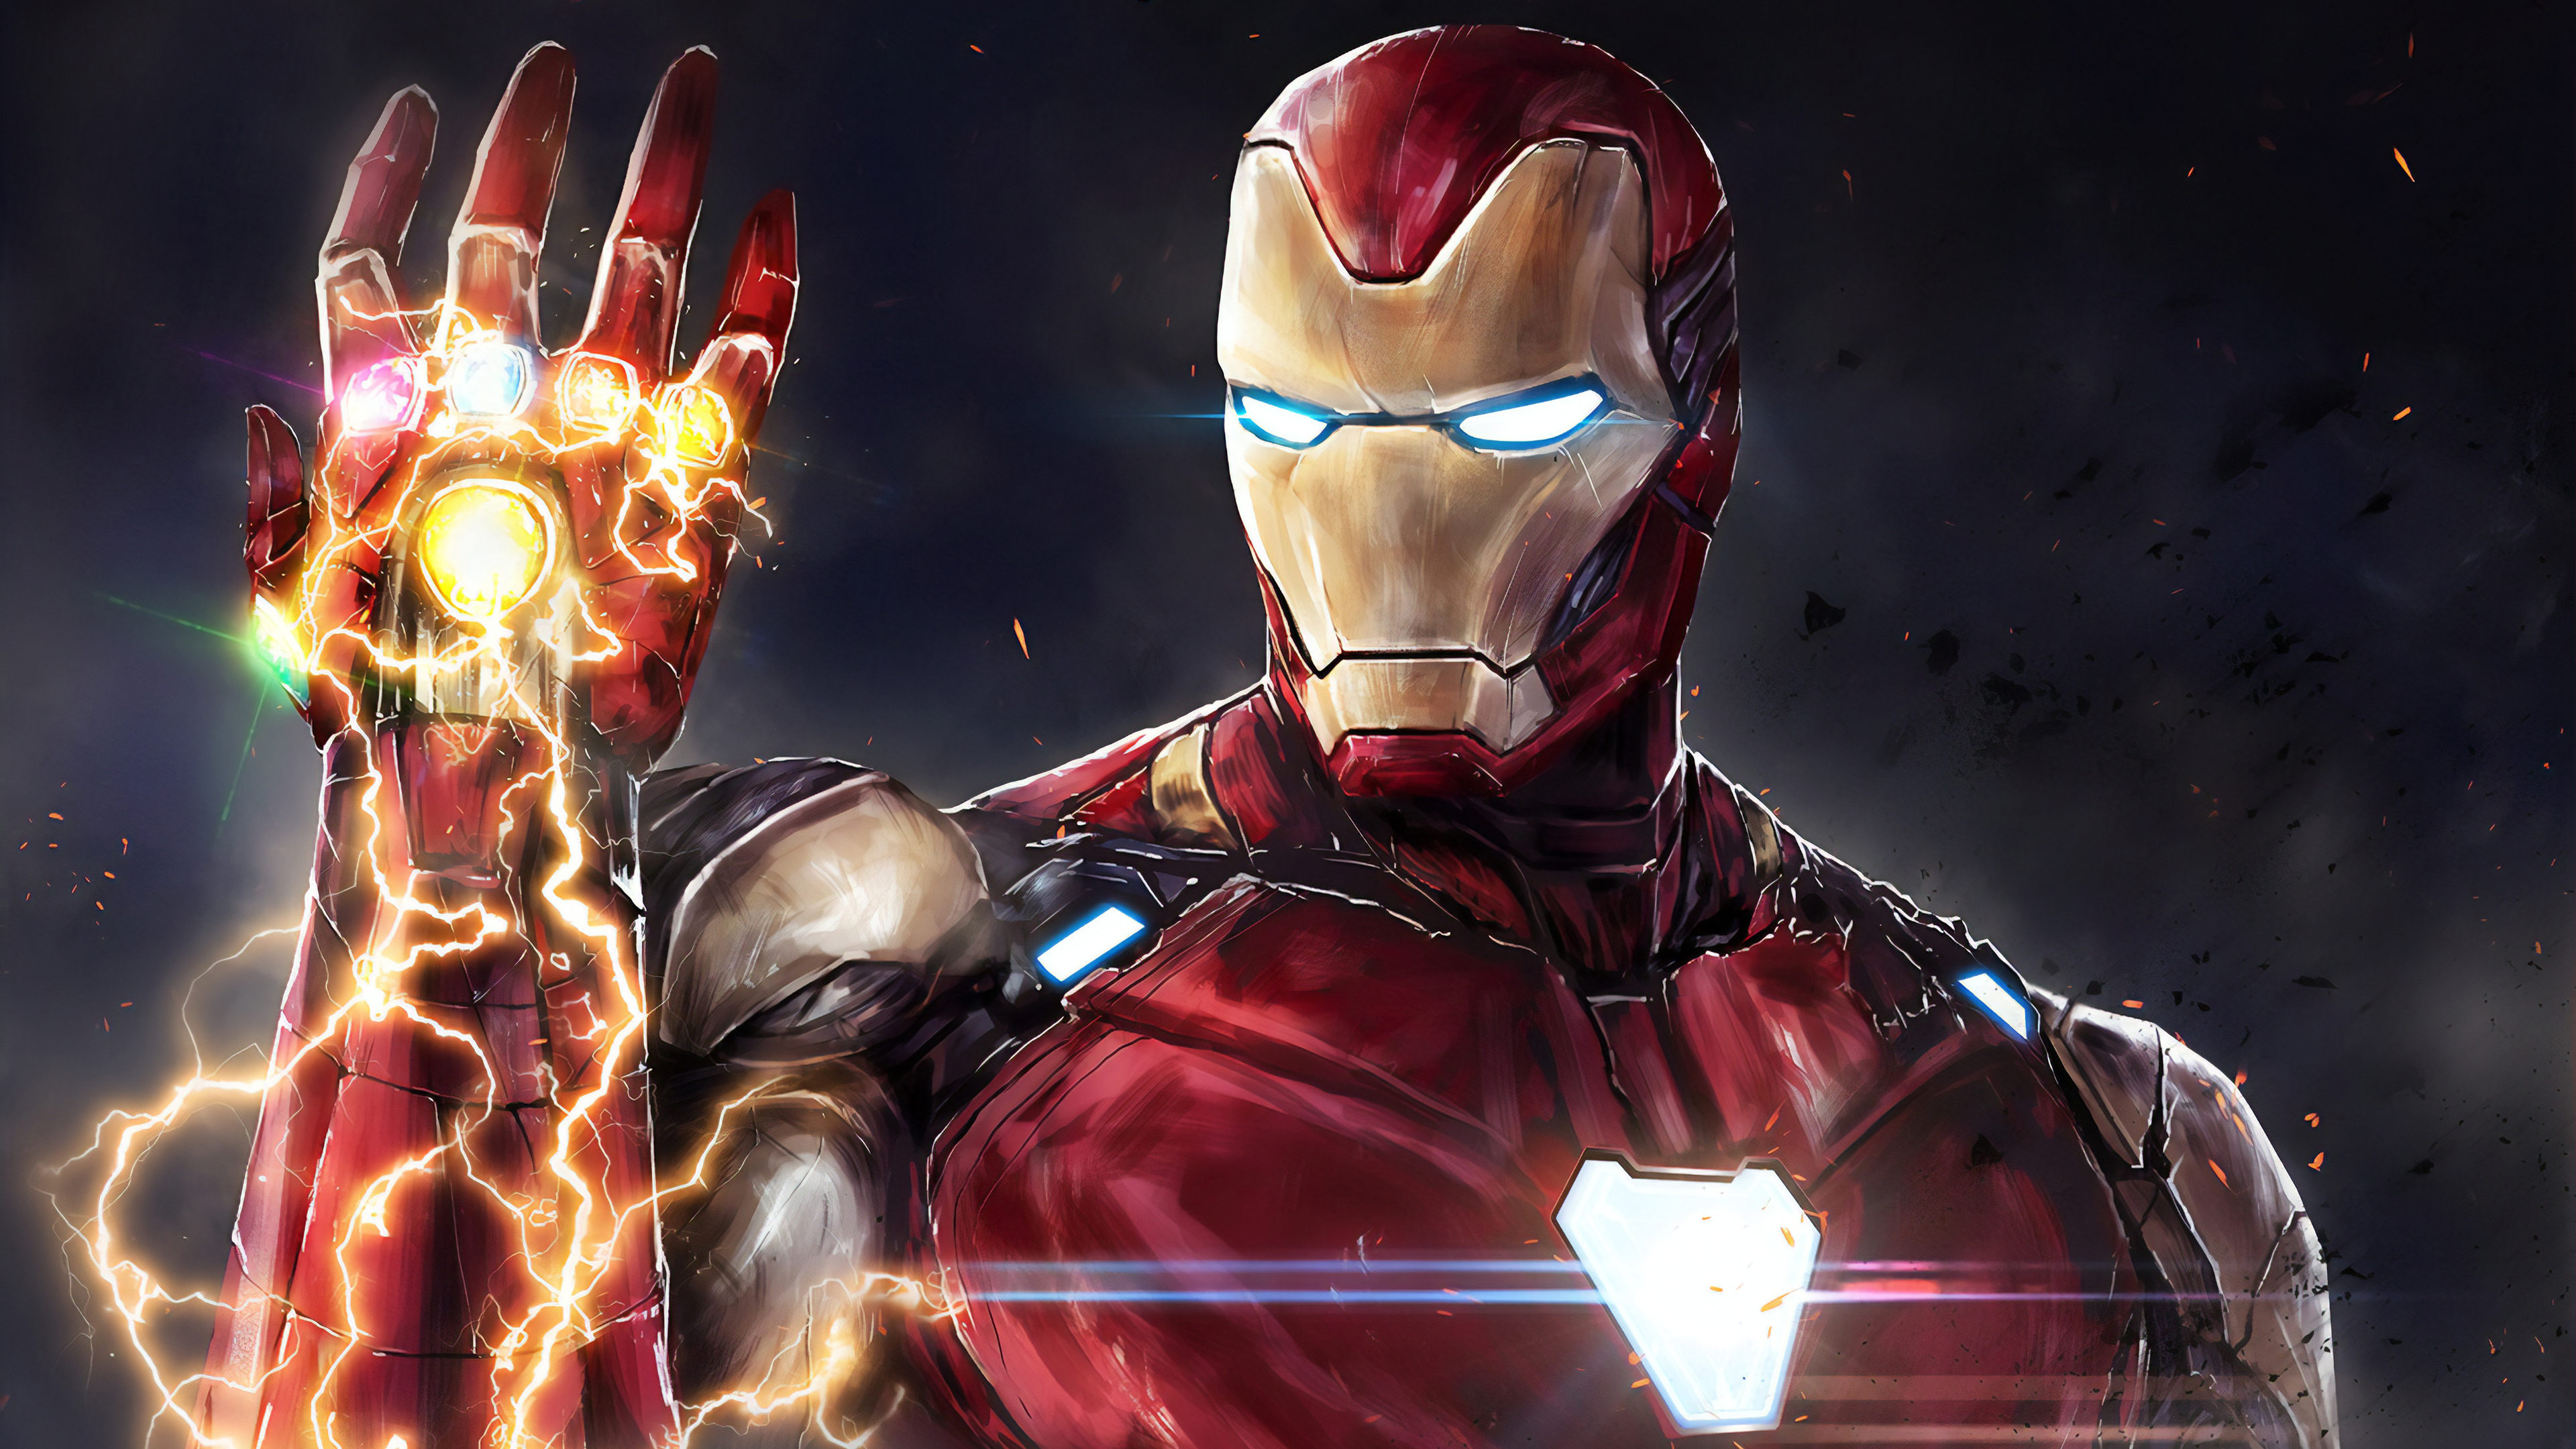 Wallpapers rendering Avengers Endgame movies on the desktop